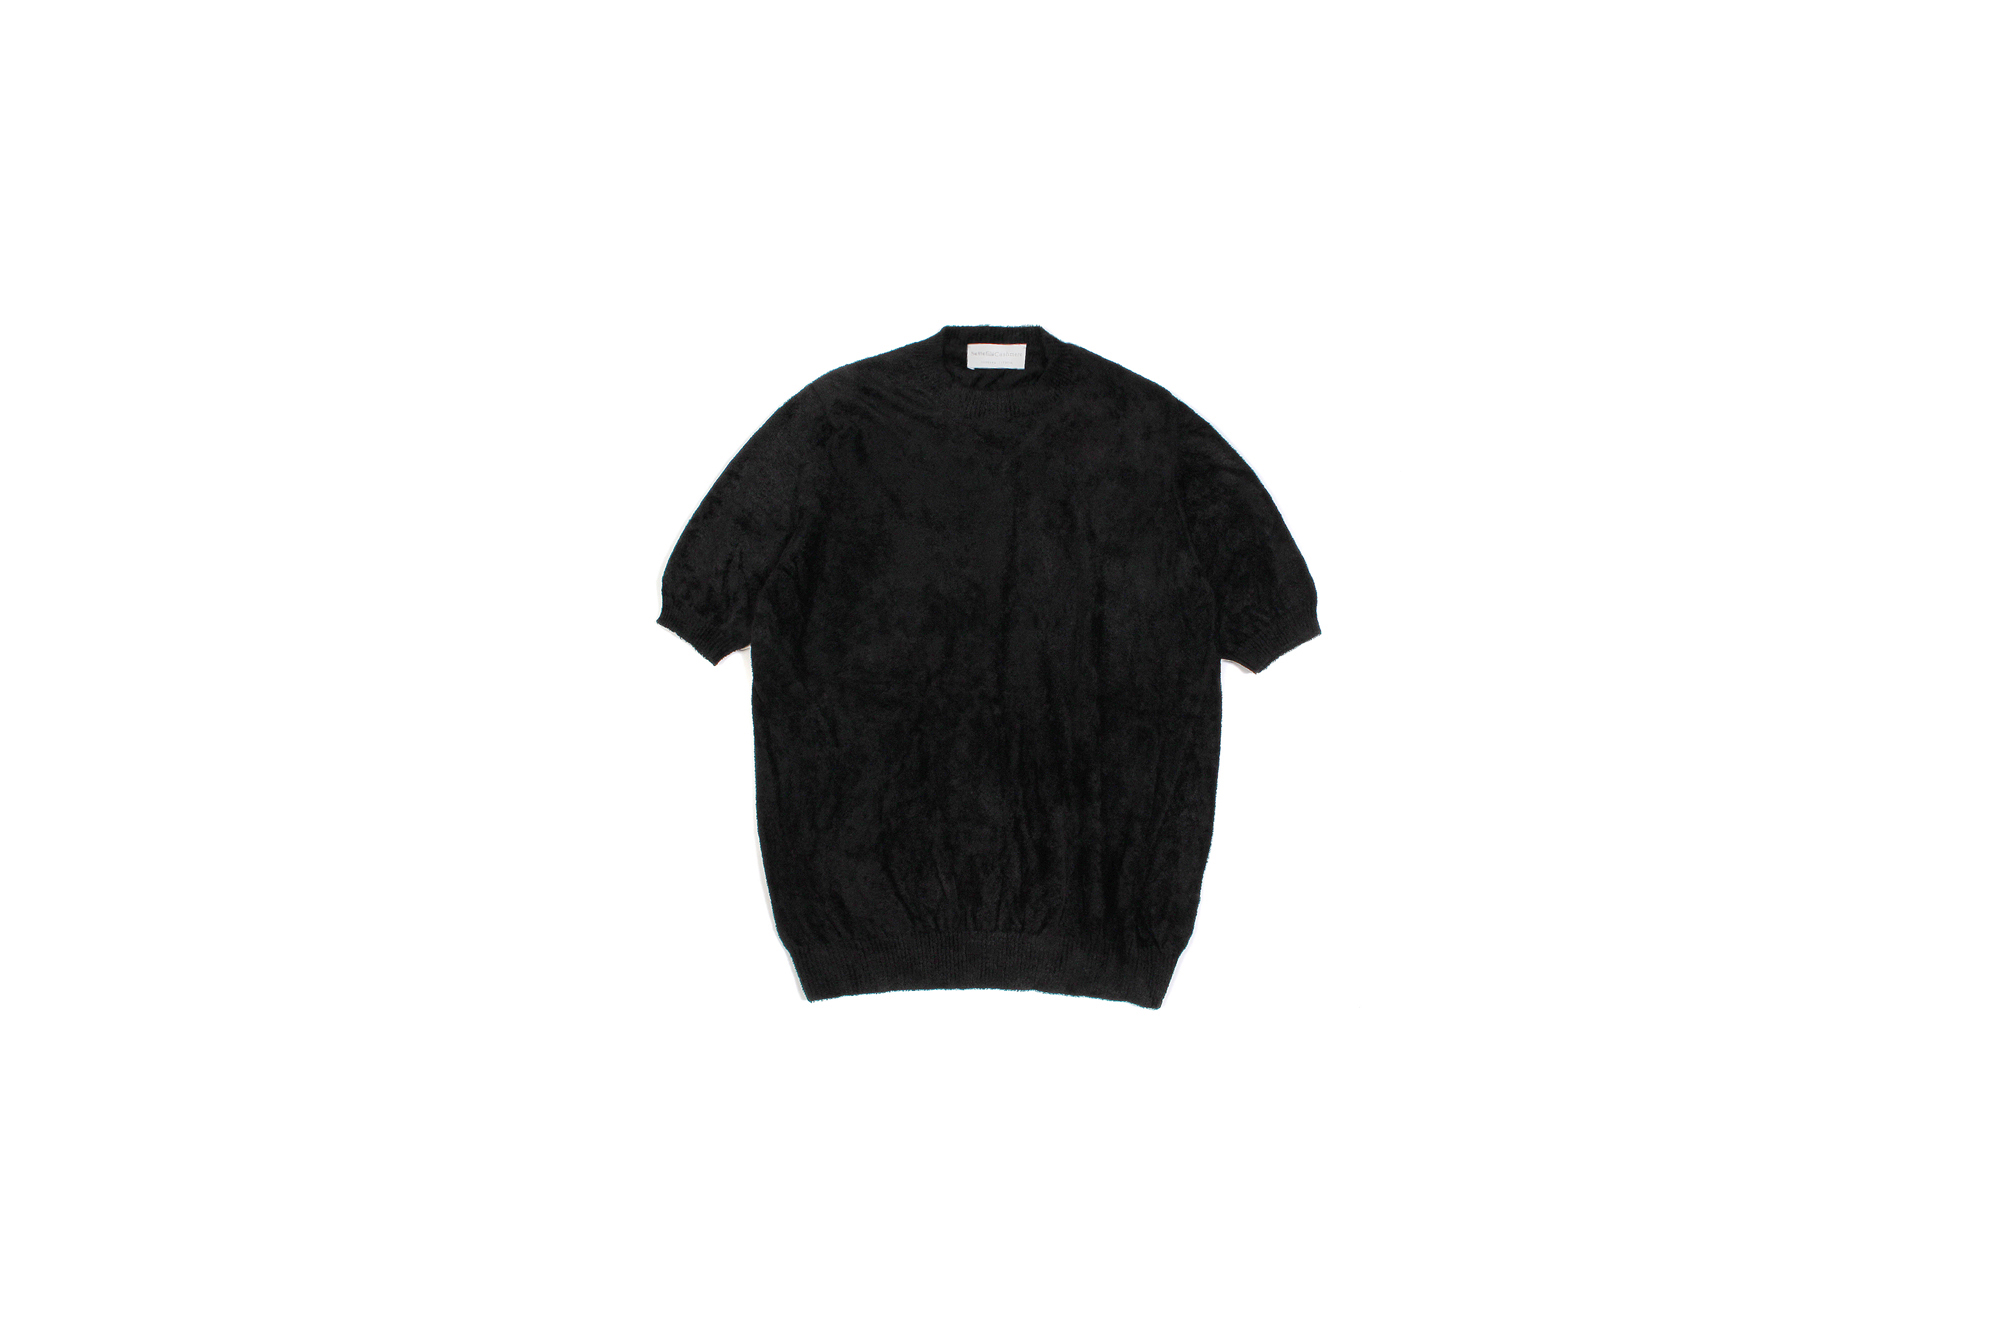 Settefili Cashmere (セッテフィーリ カシミア) Pile Knit T-shirt パイルニットTシャツ BLACK (ブラック・GD03) made in italy (イタリア製) 2020 春夏新作 愛知 名古屋 altoediritto アルトエデリット